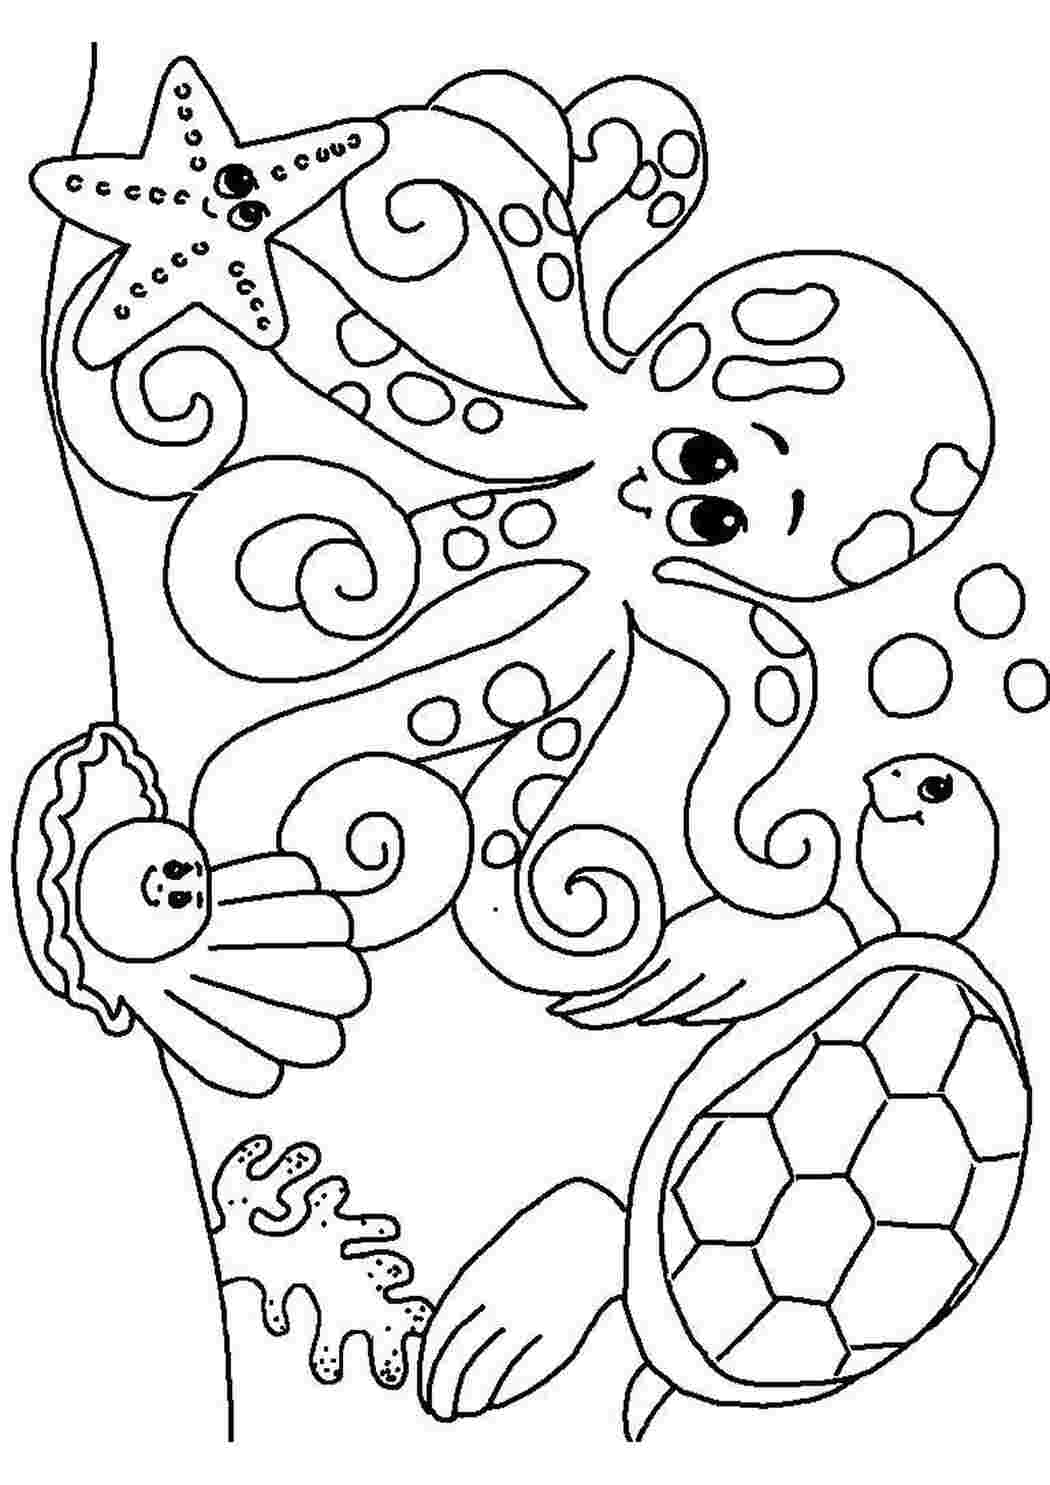 Раскраски Черепаха и осьминог морские обитатели осьминог, черепаха, звезда, ракушка